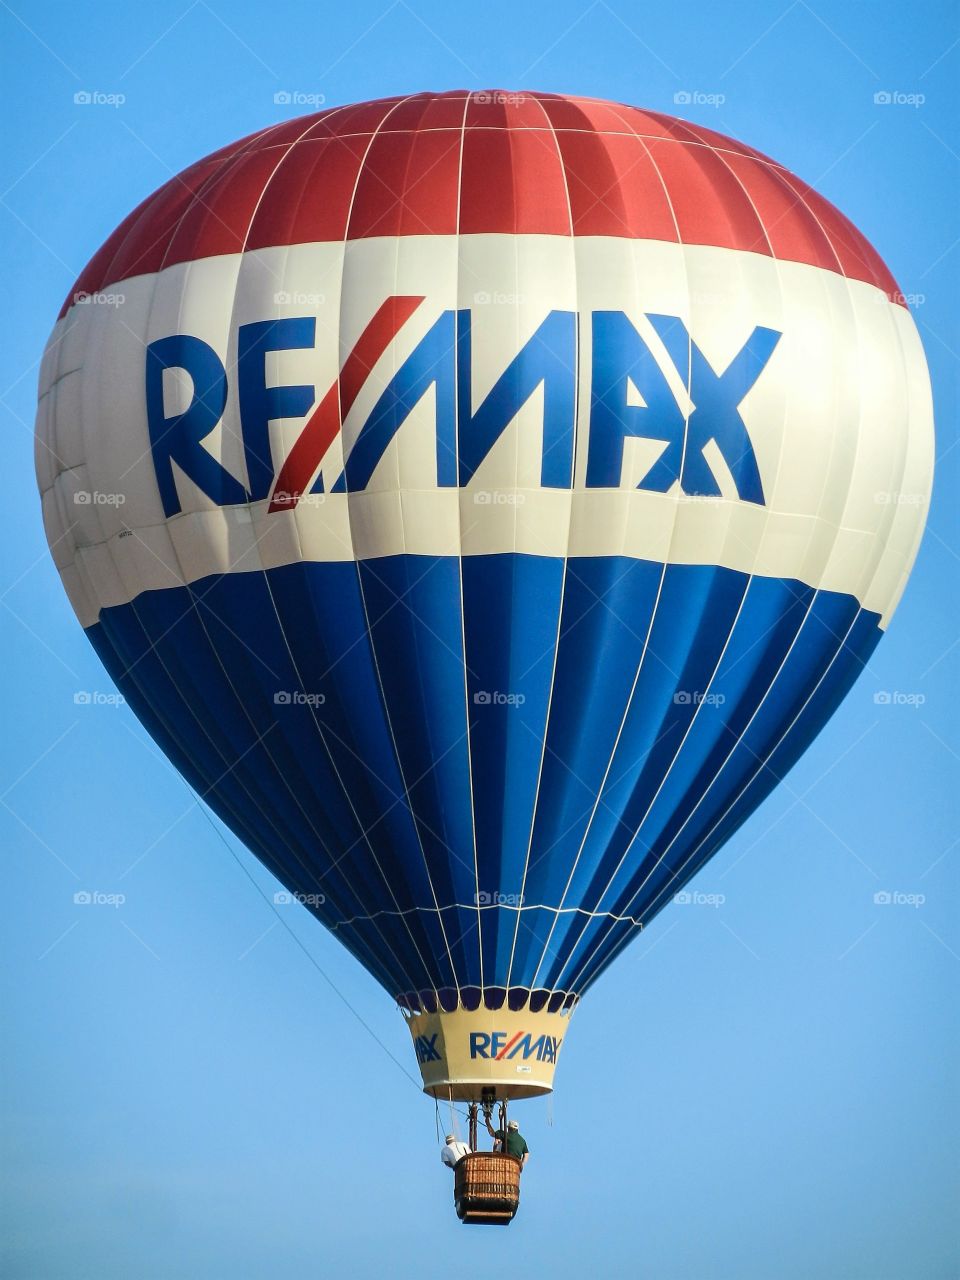 Relax Hot Air Balloon